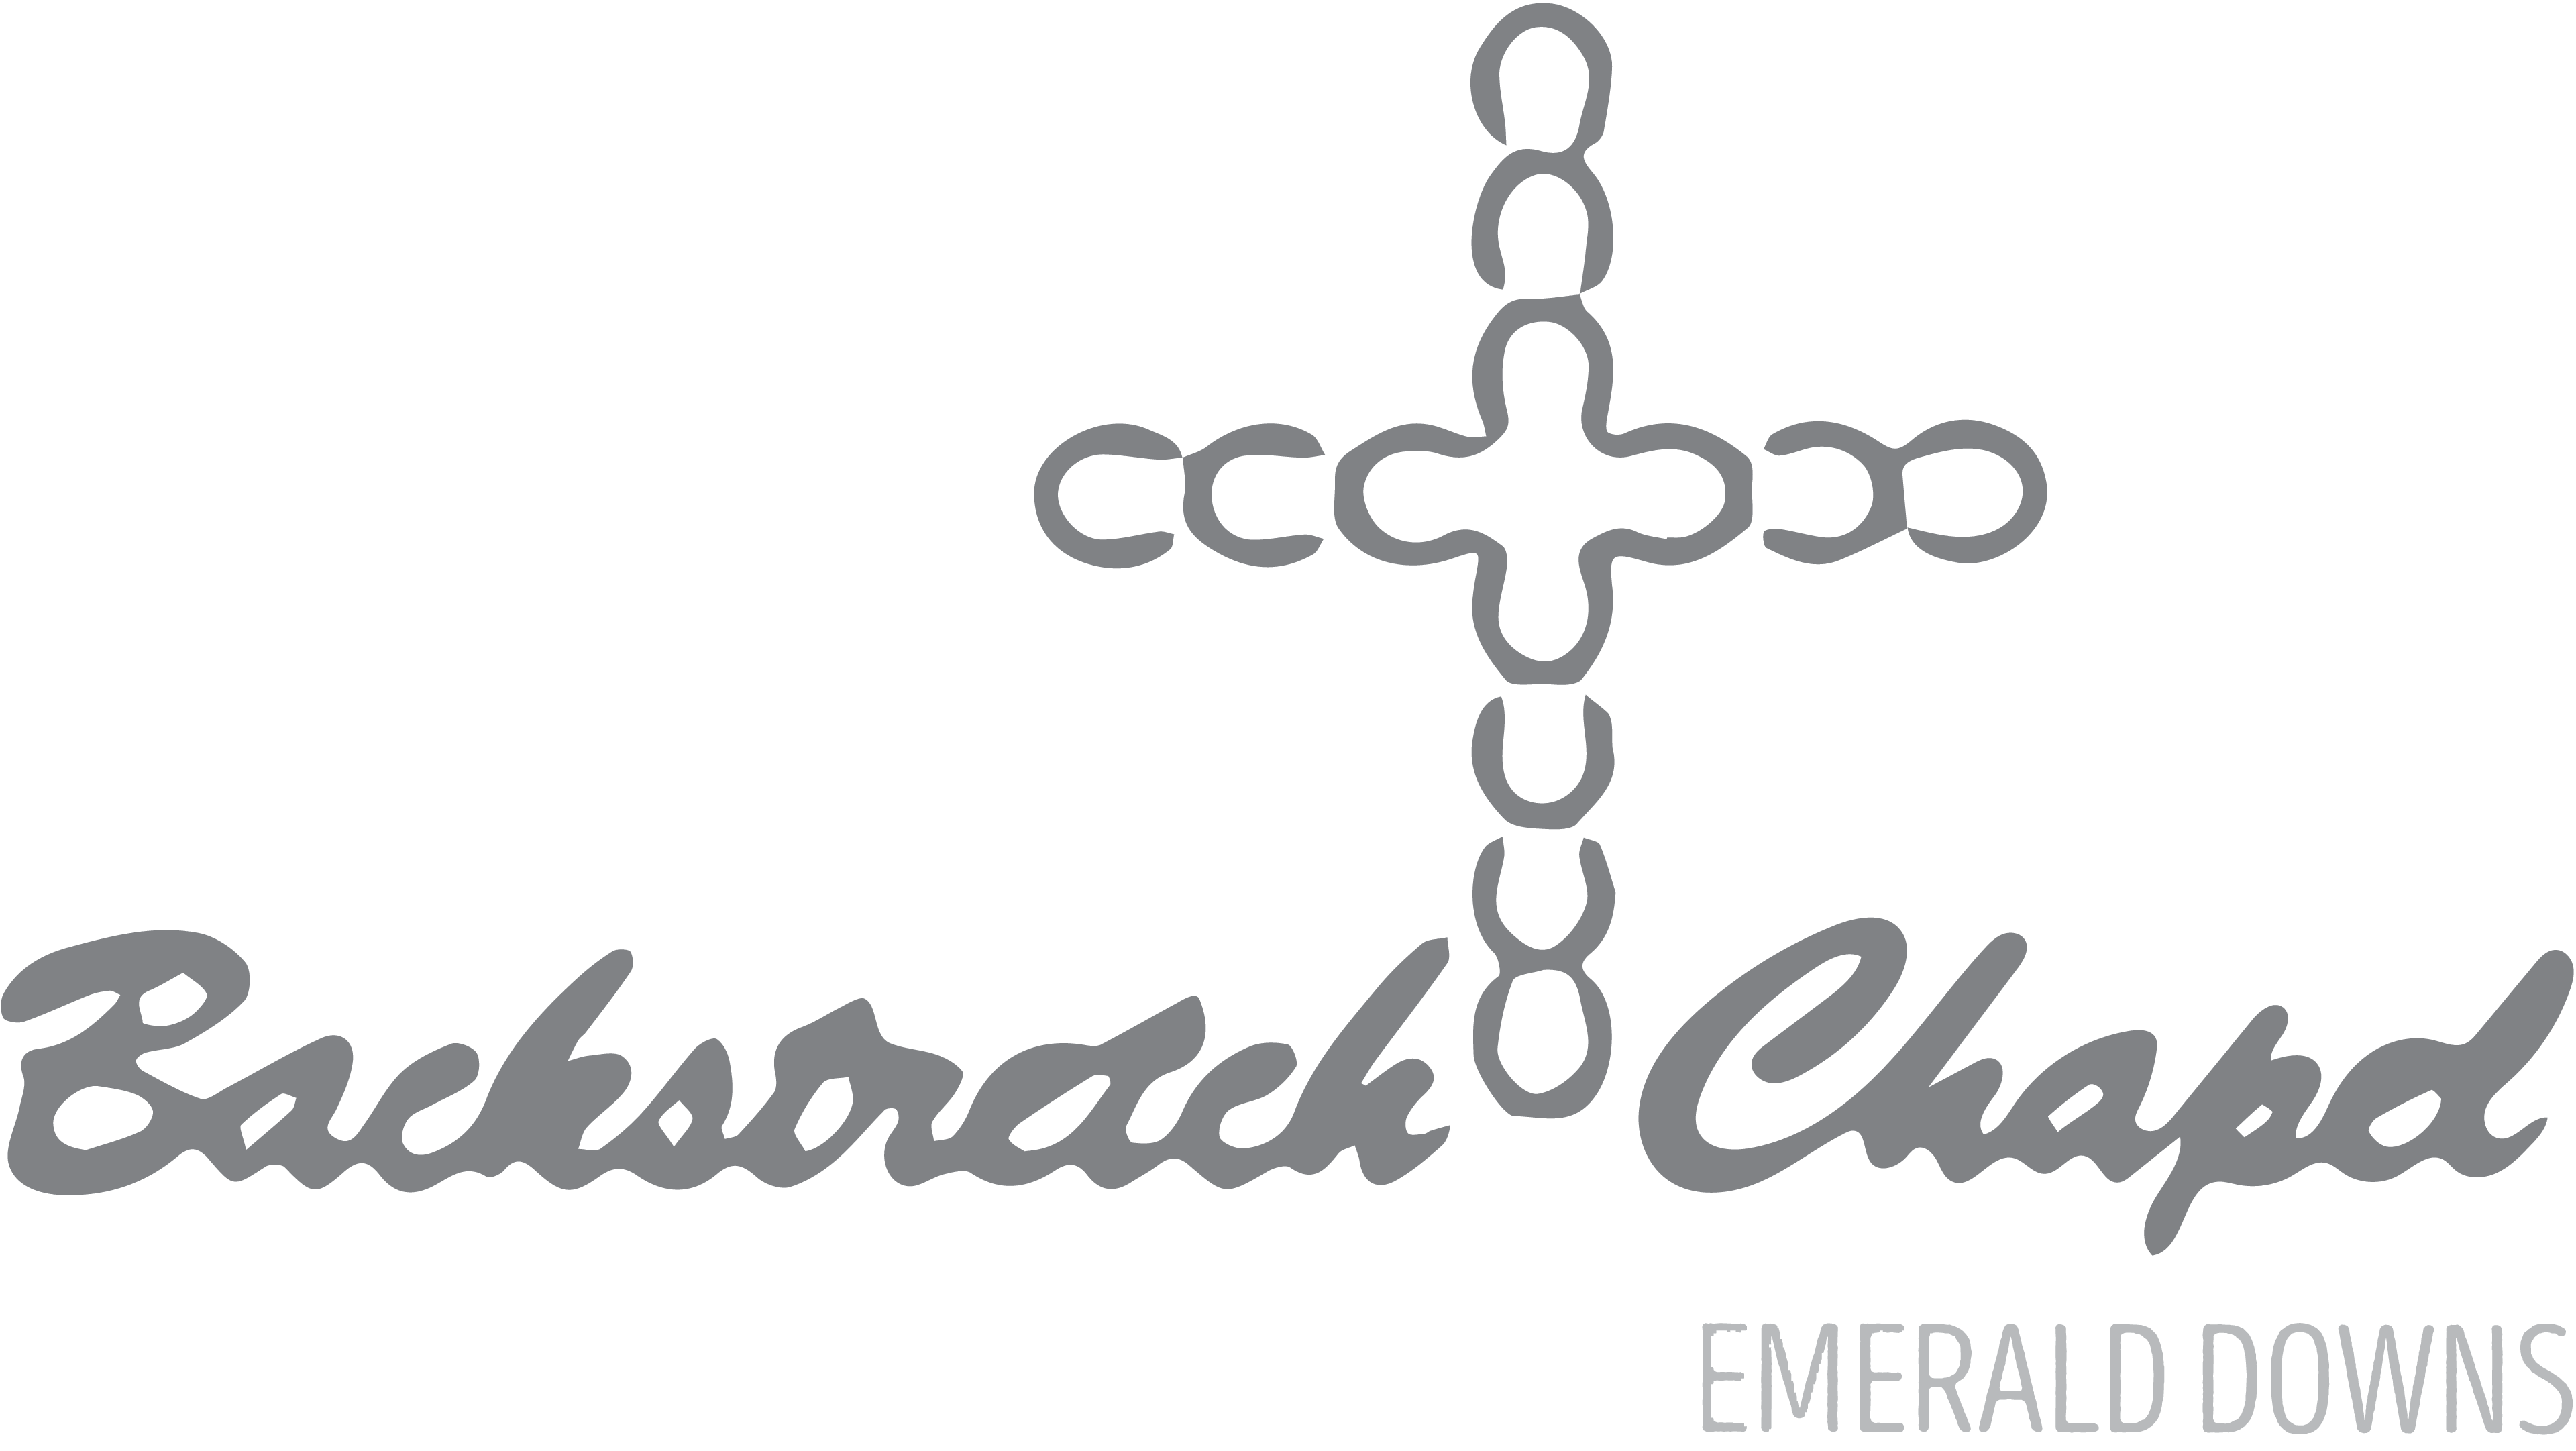 Backstretch Chapel Emerald Downs logo